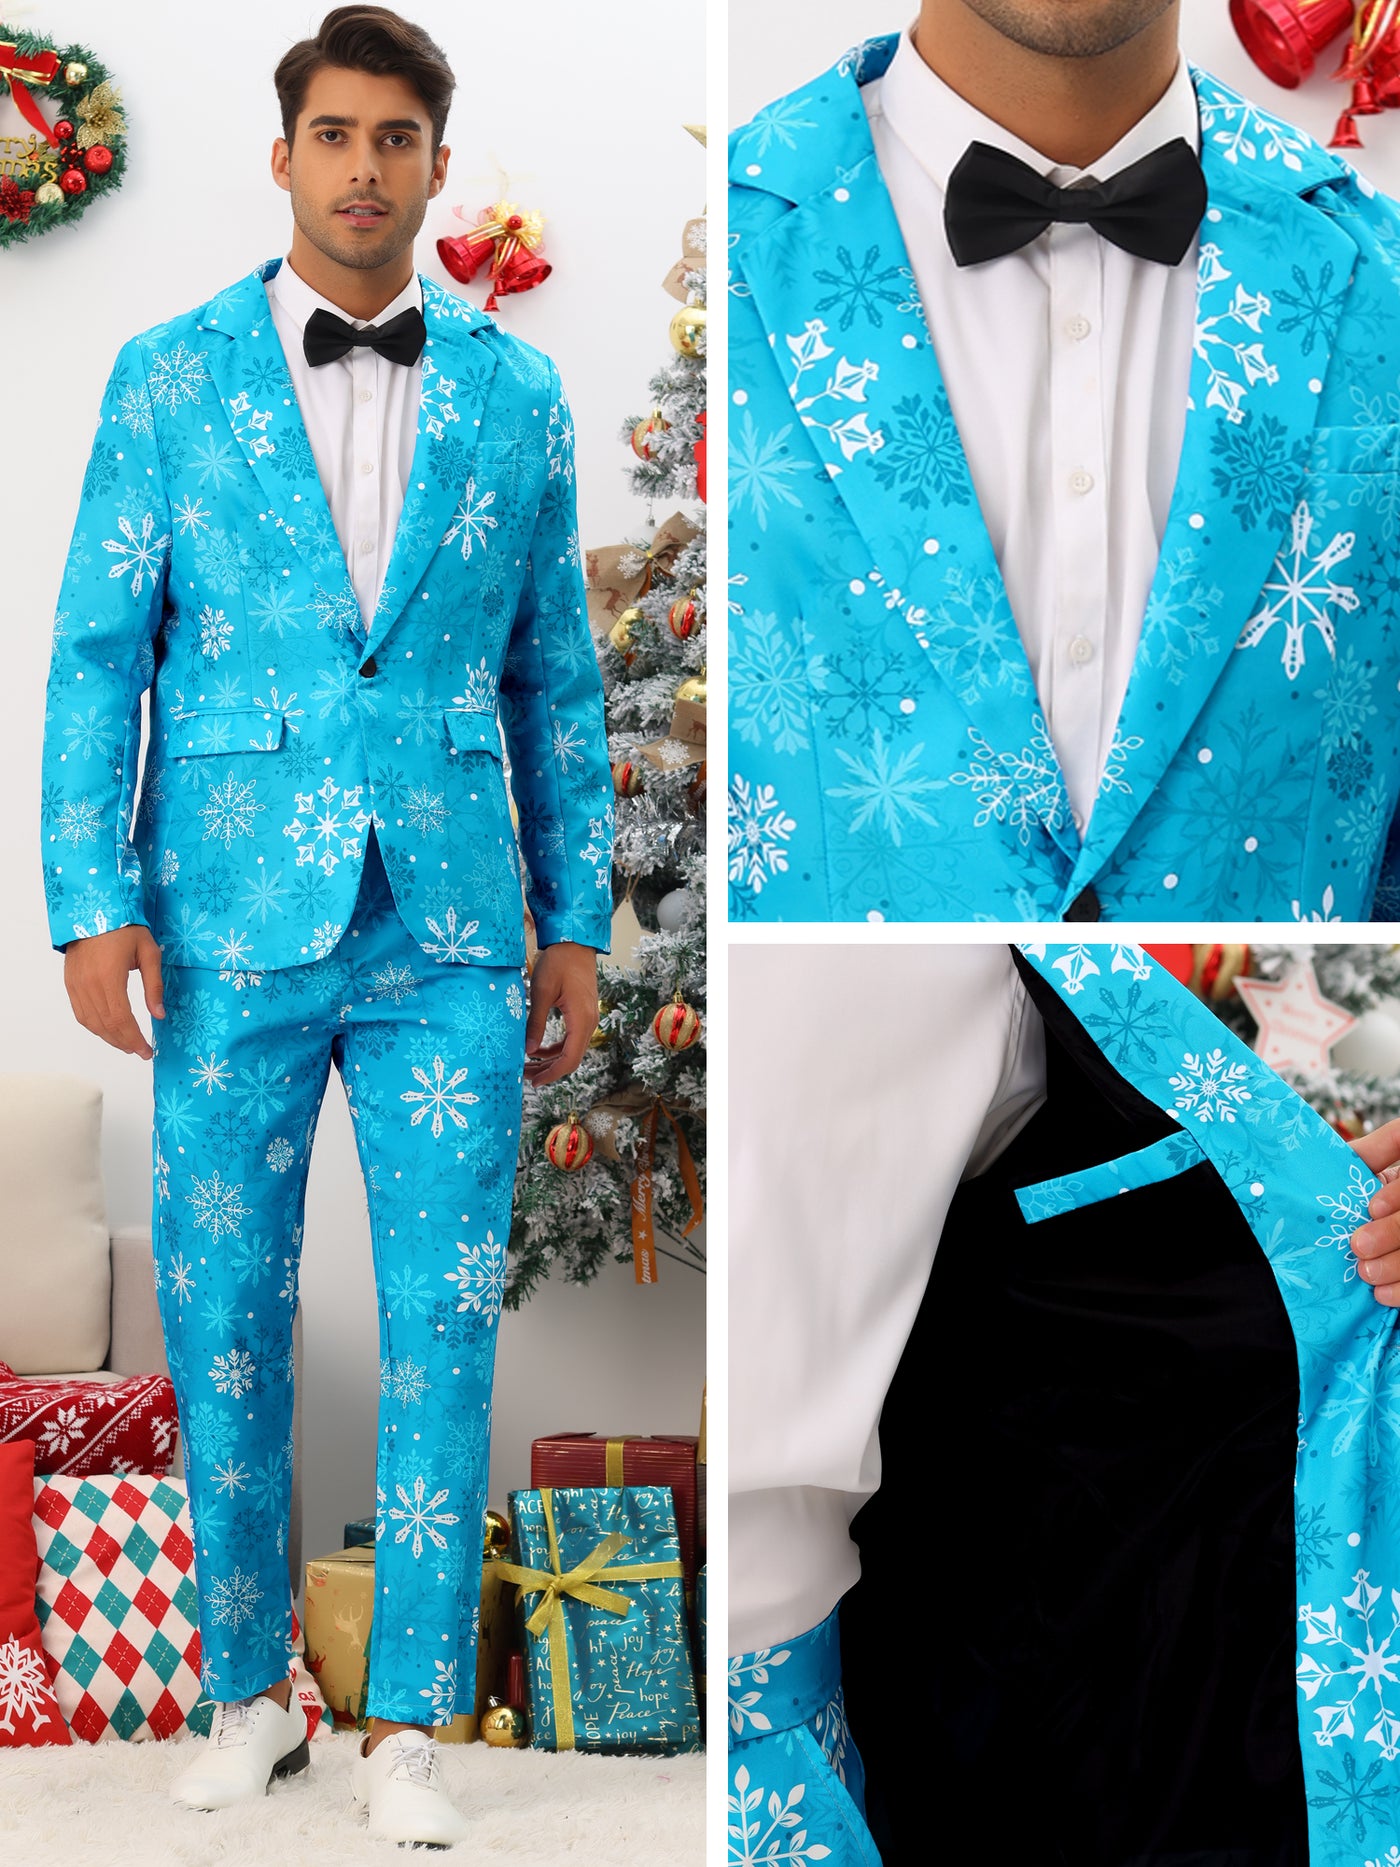 Bublédon Christmas Printed Blazer for Men's Notch Lapel Costume Sports Coat